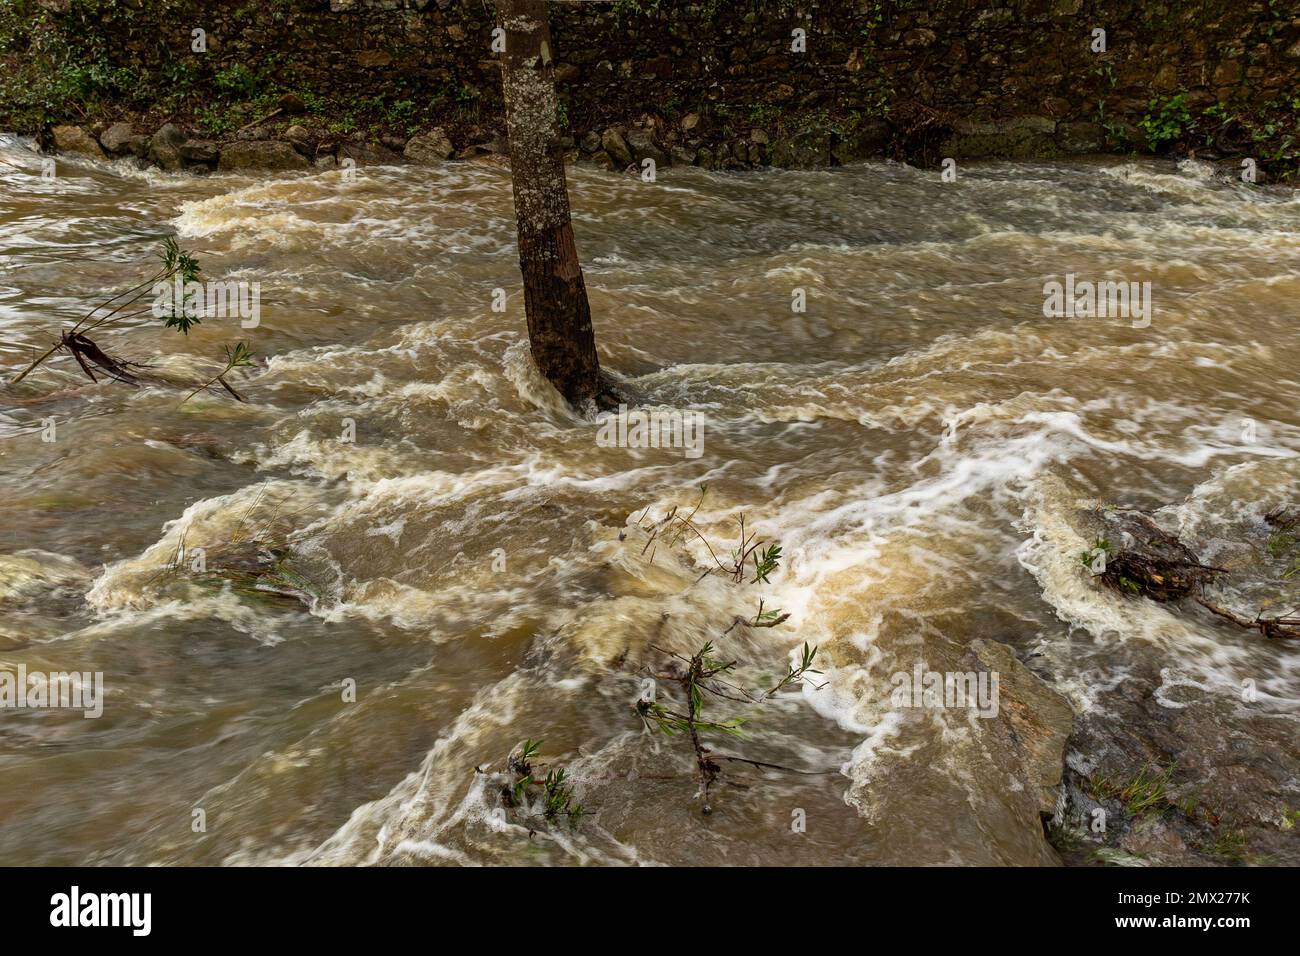 View of the Heavy rains creating high flow brown river water in Sao Bras de  Alportel, Fonte Ferrea location, Portugal Stock Photo - Alamy